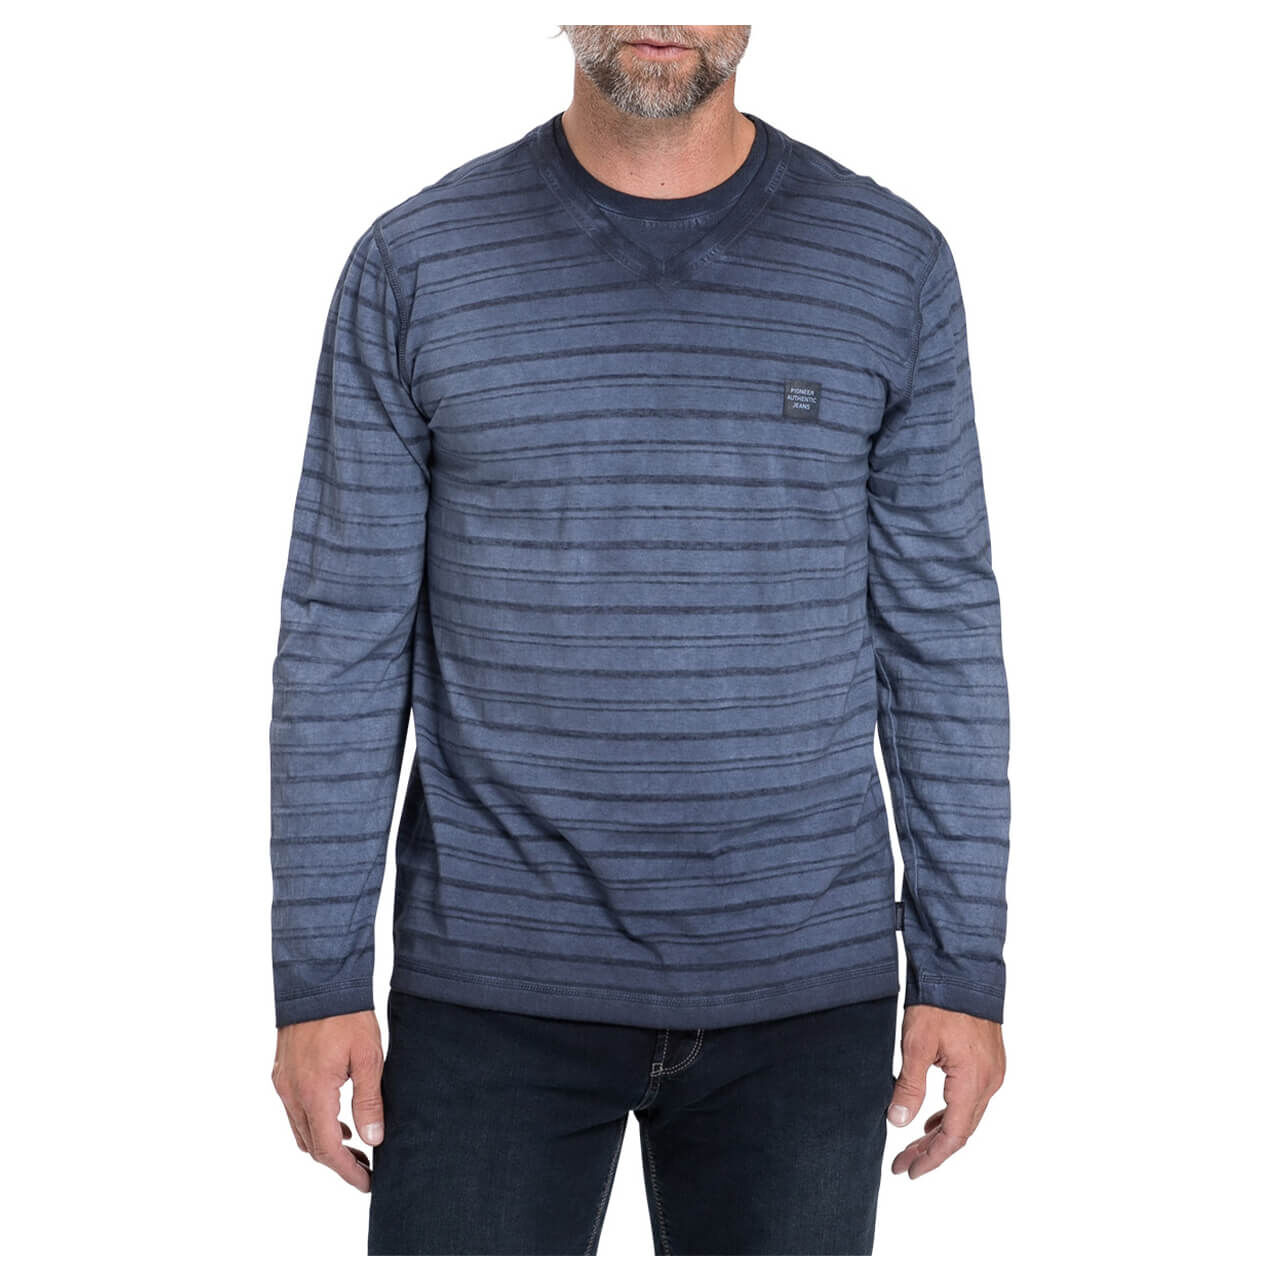 Pioneer Herren Langarm Shirt blue washed stripes